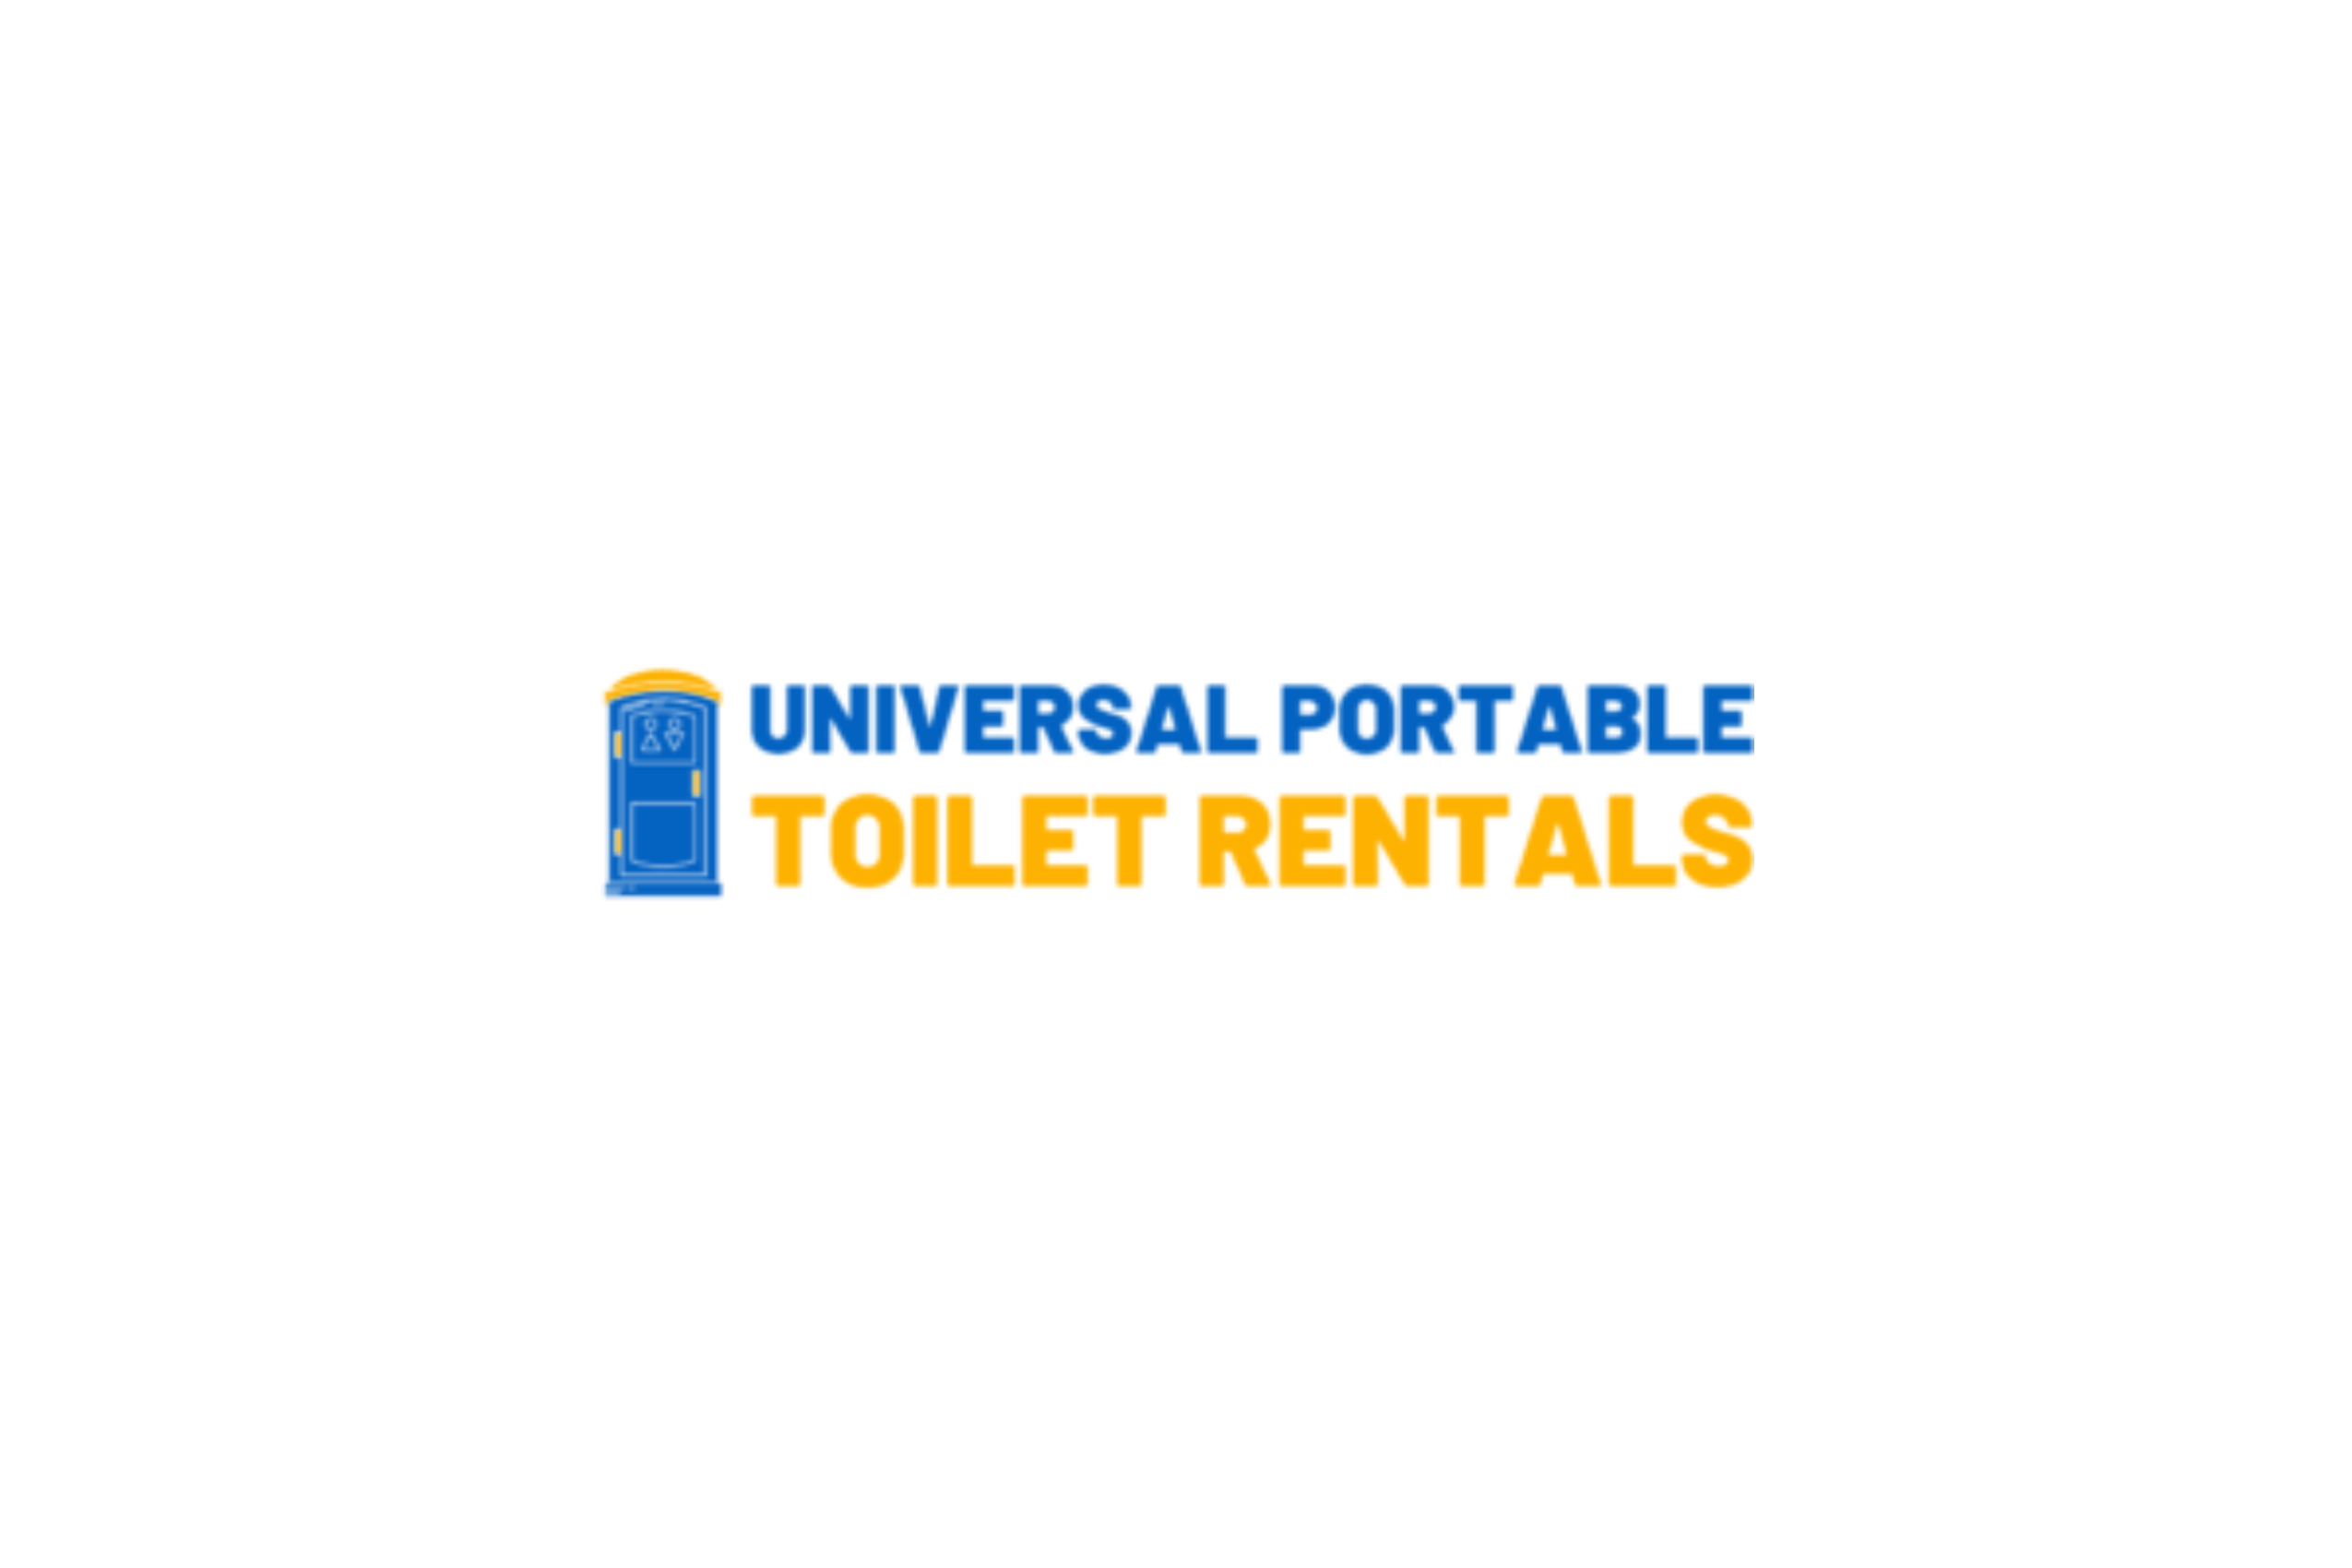 Universal Portable Toilet Rentals